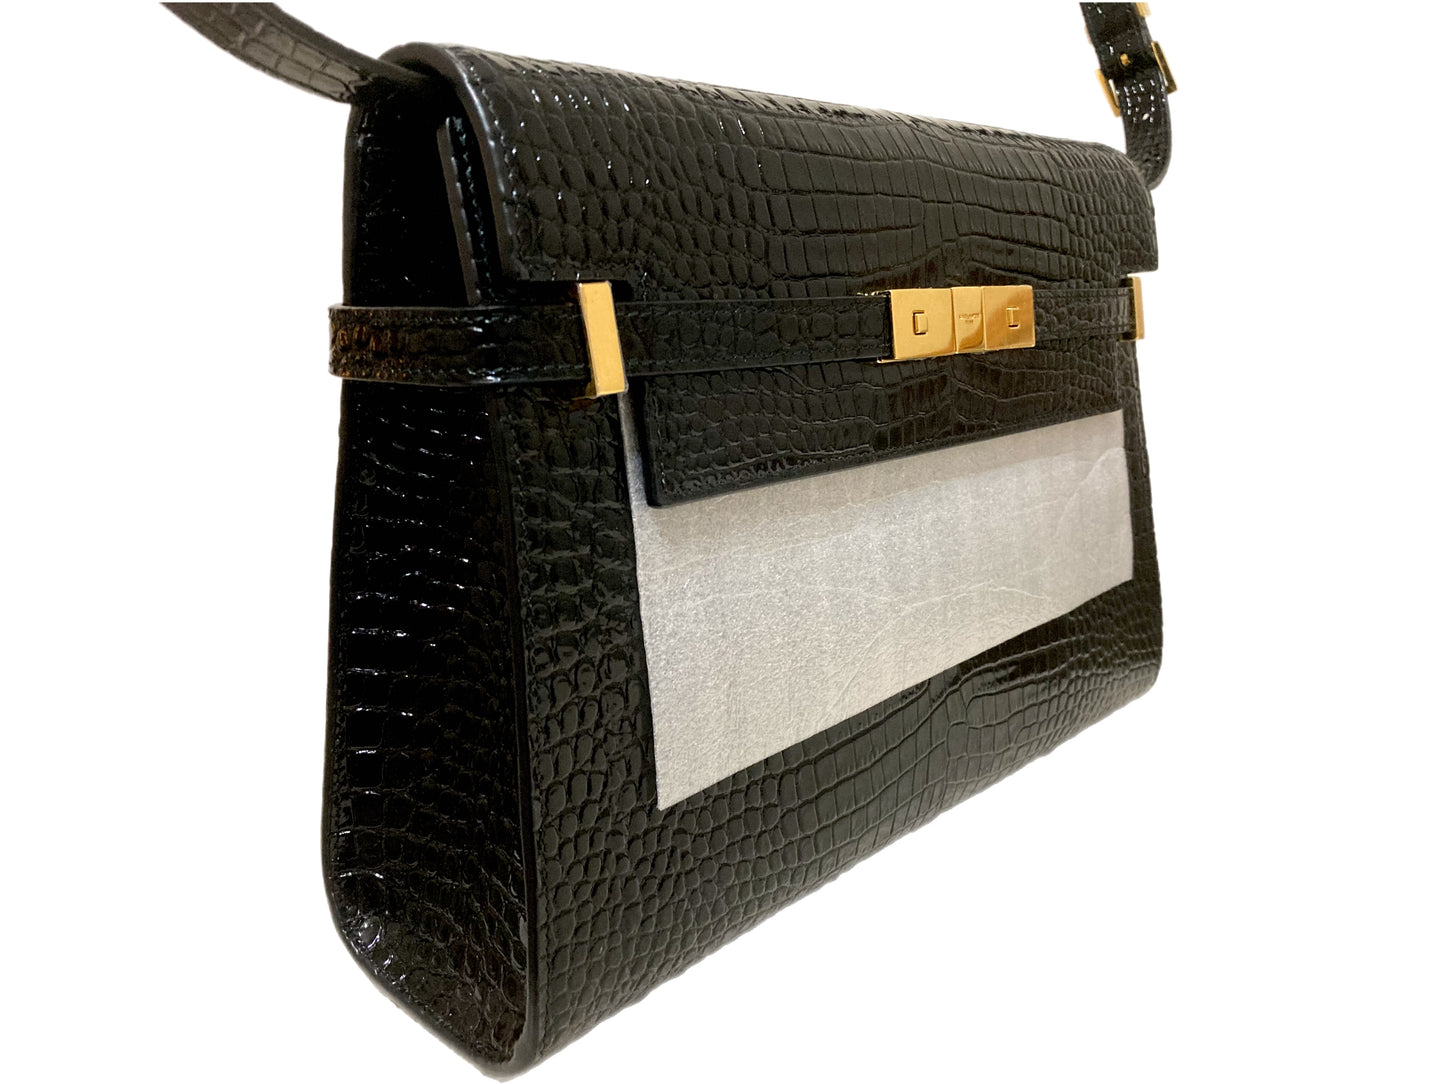 Saint Laurent Manhattan Leather Shoulder Bag - Black Croc/Gold